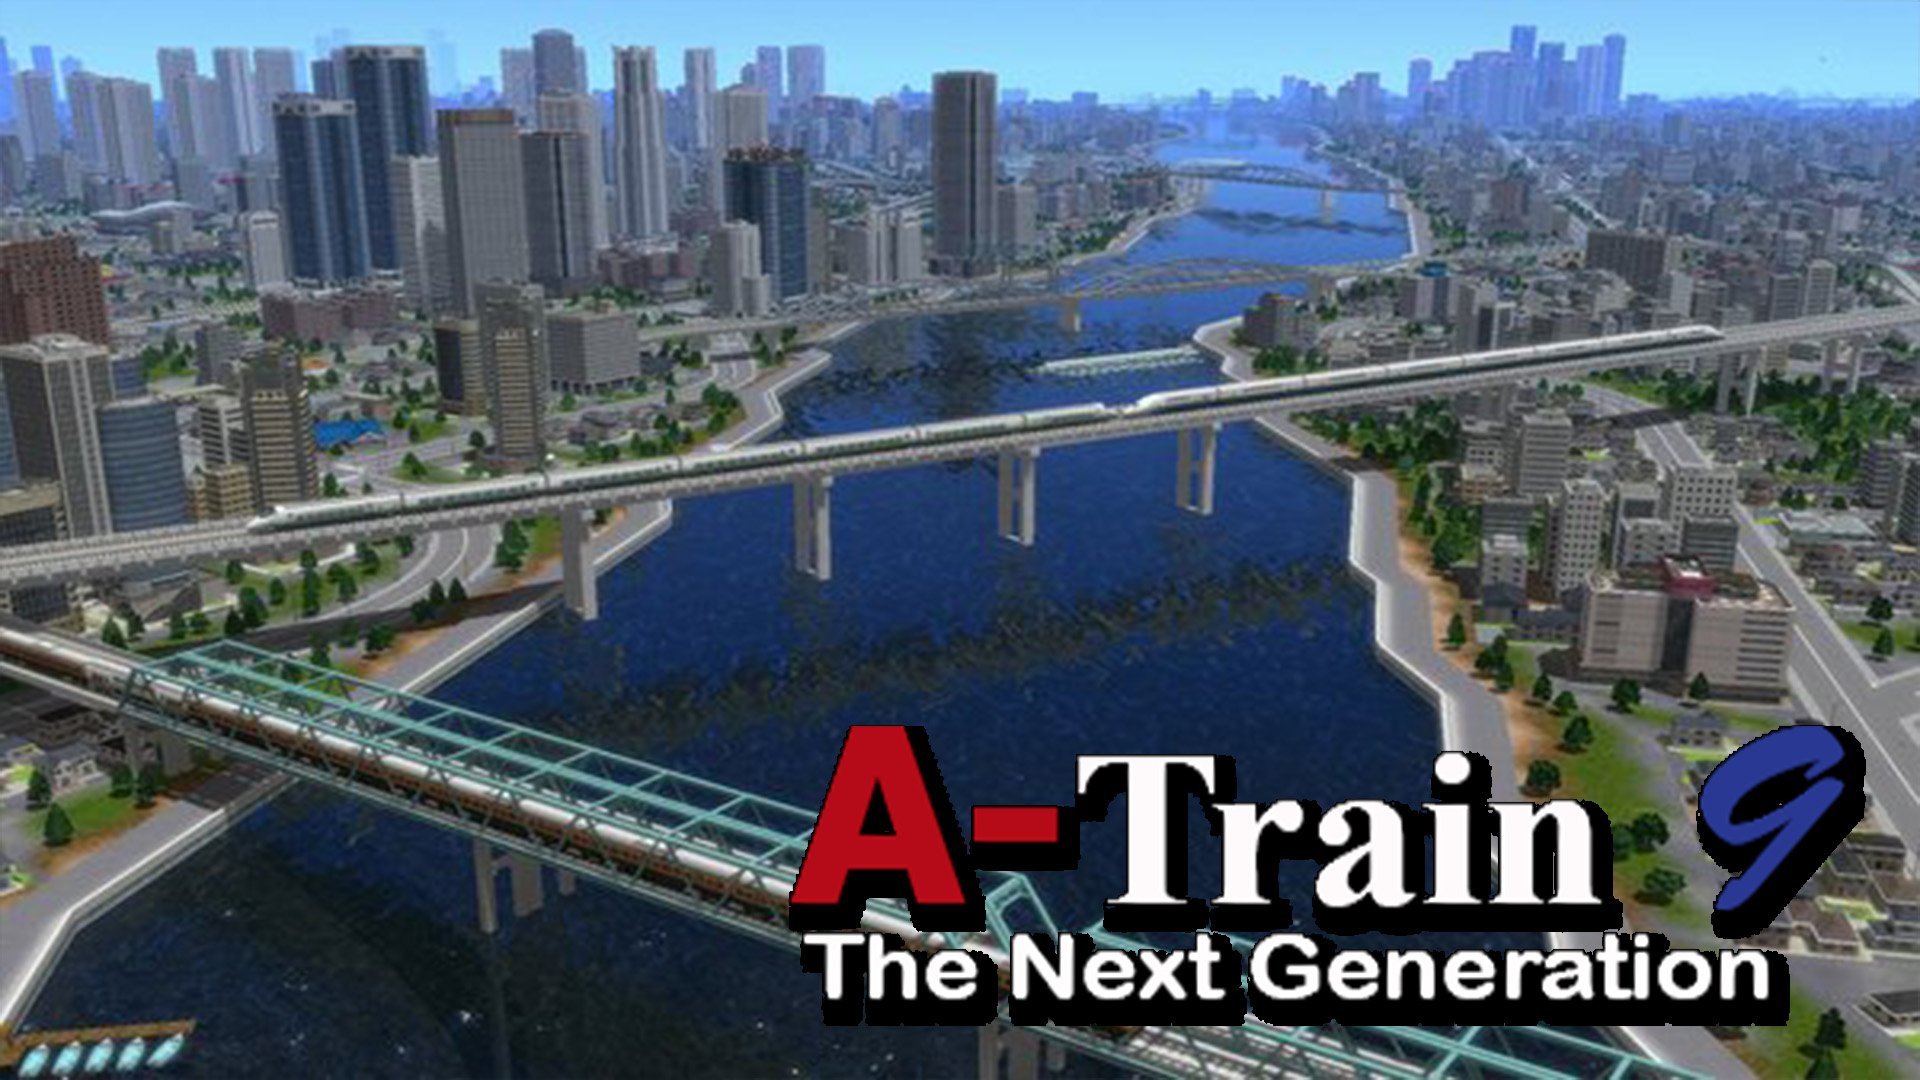 A-Train 9: The Next Generation HD Wallpaper